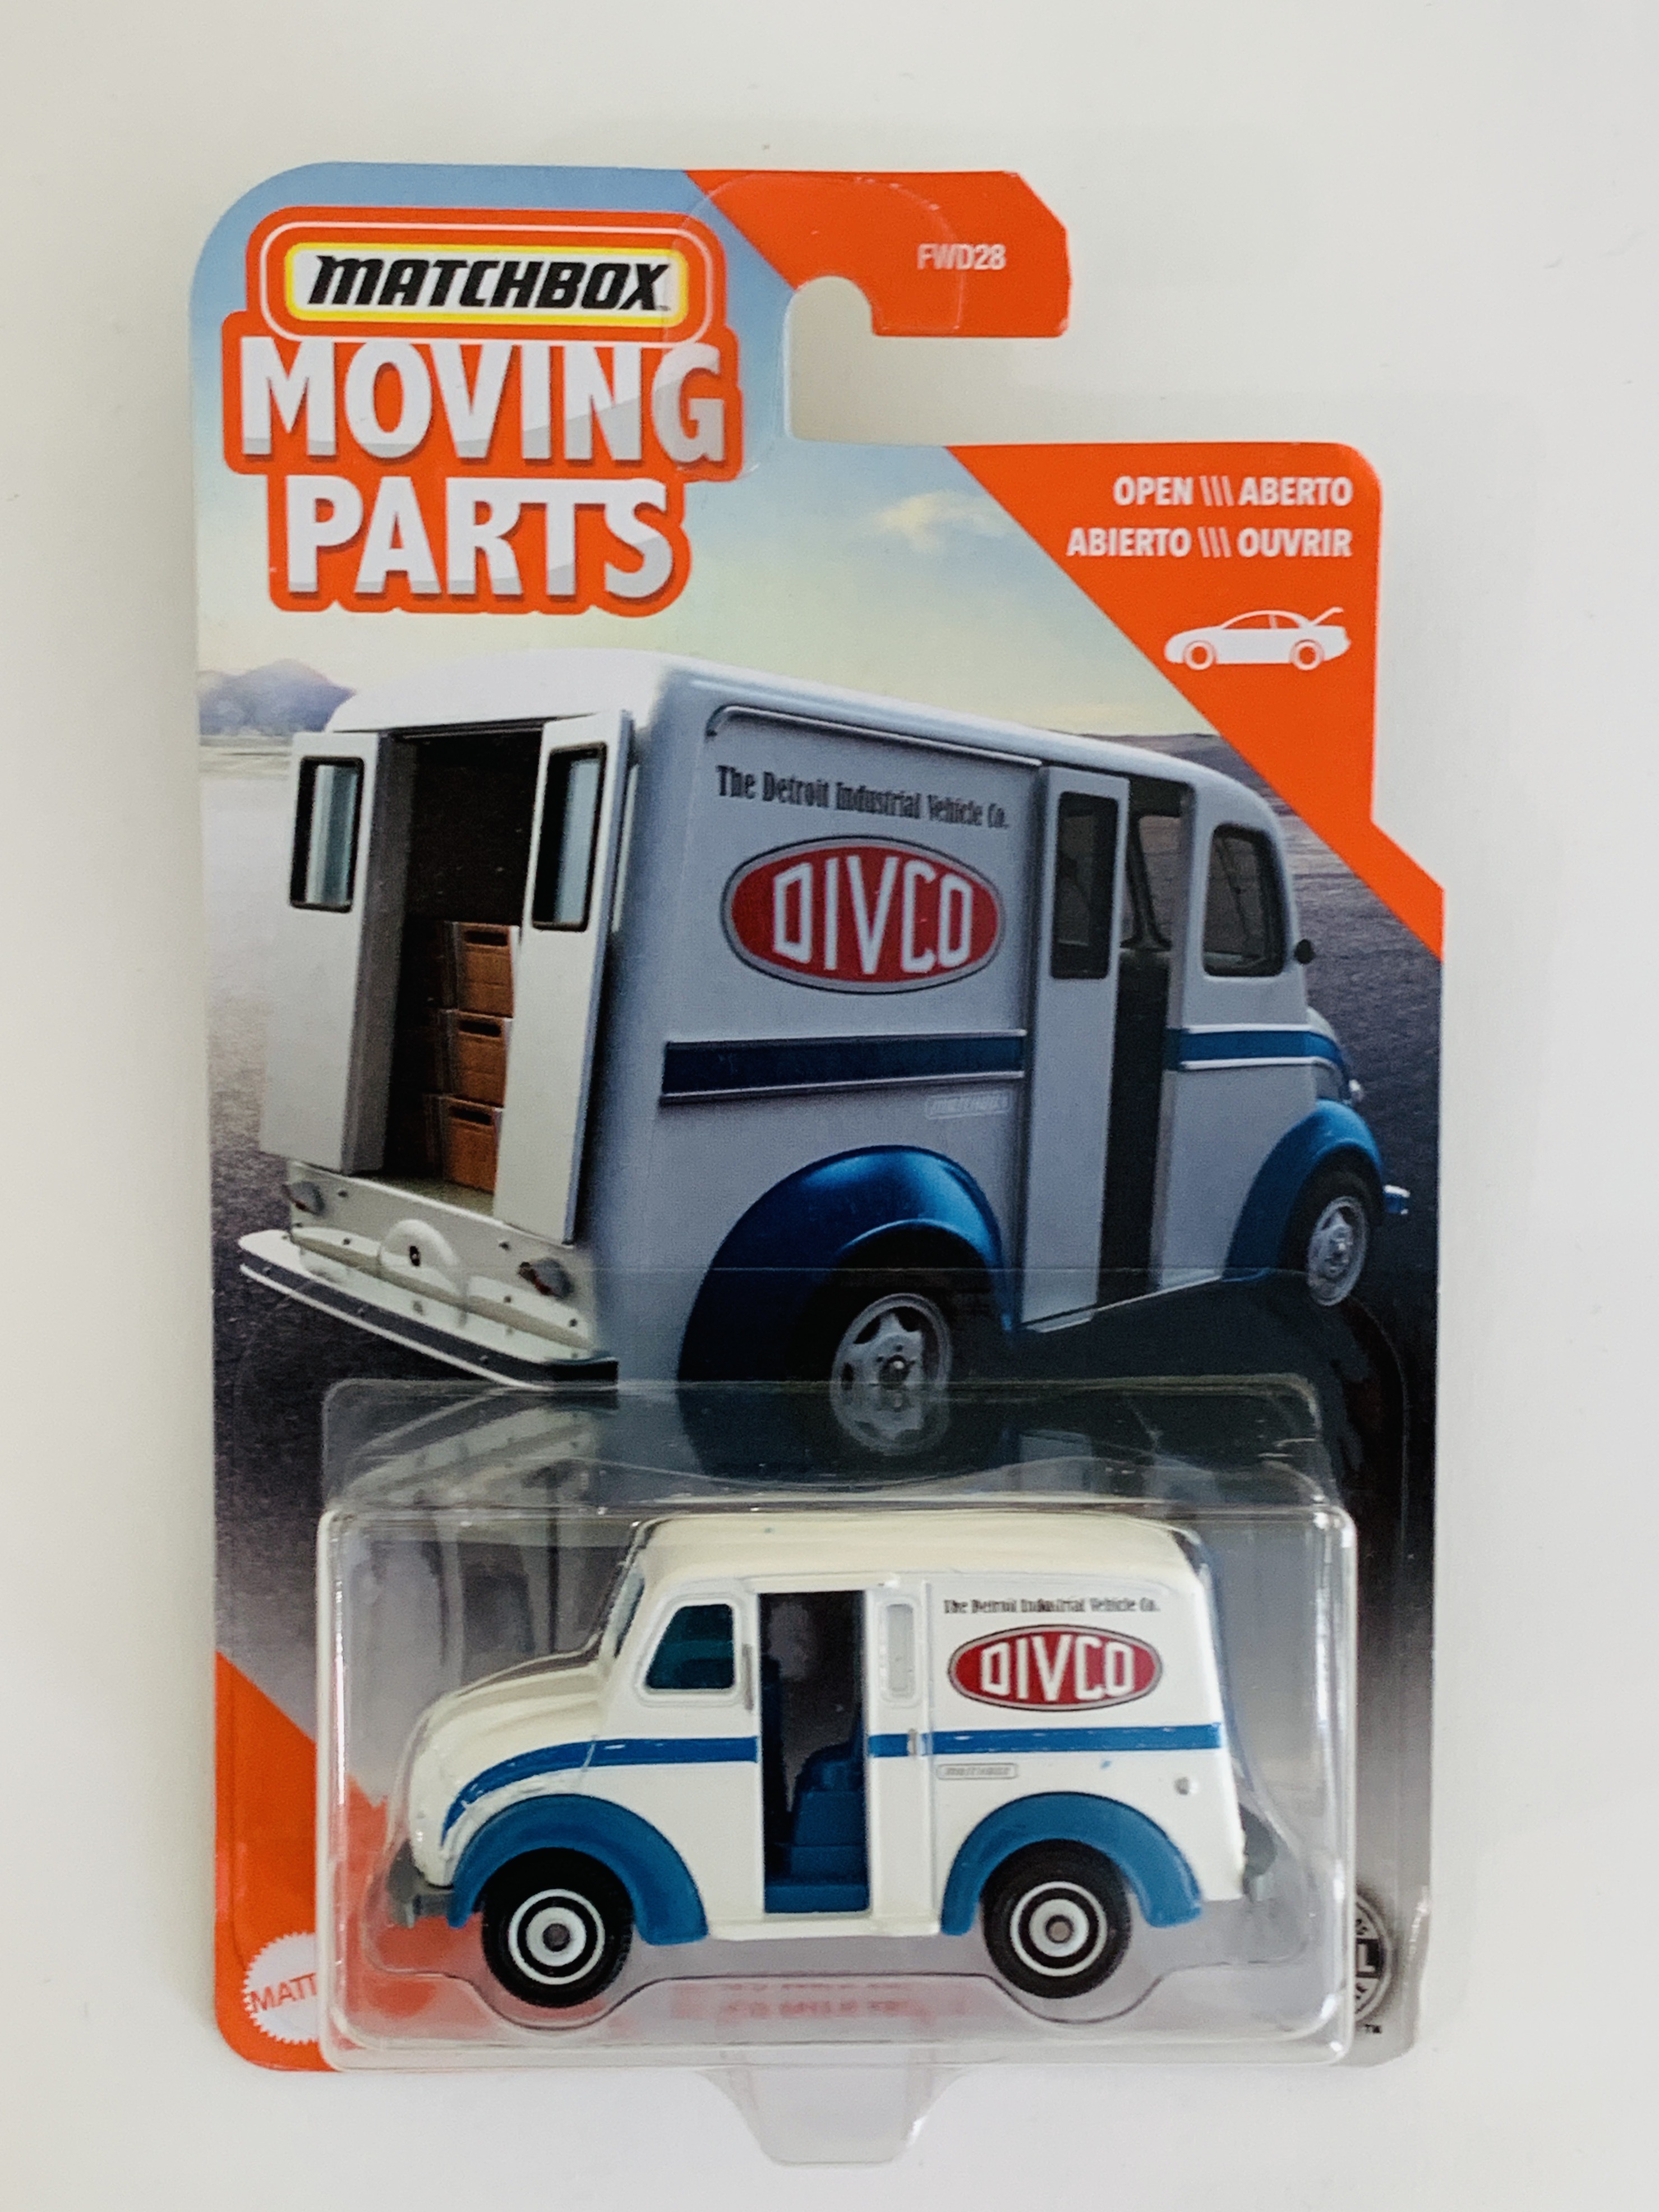 Matchbox Moving Parts Divco Milk Truck